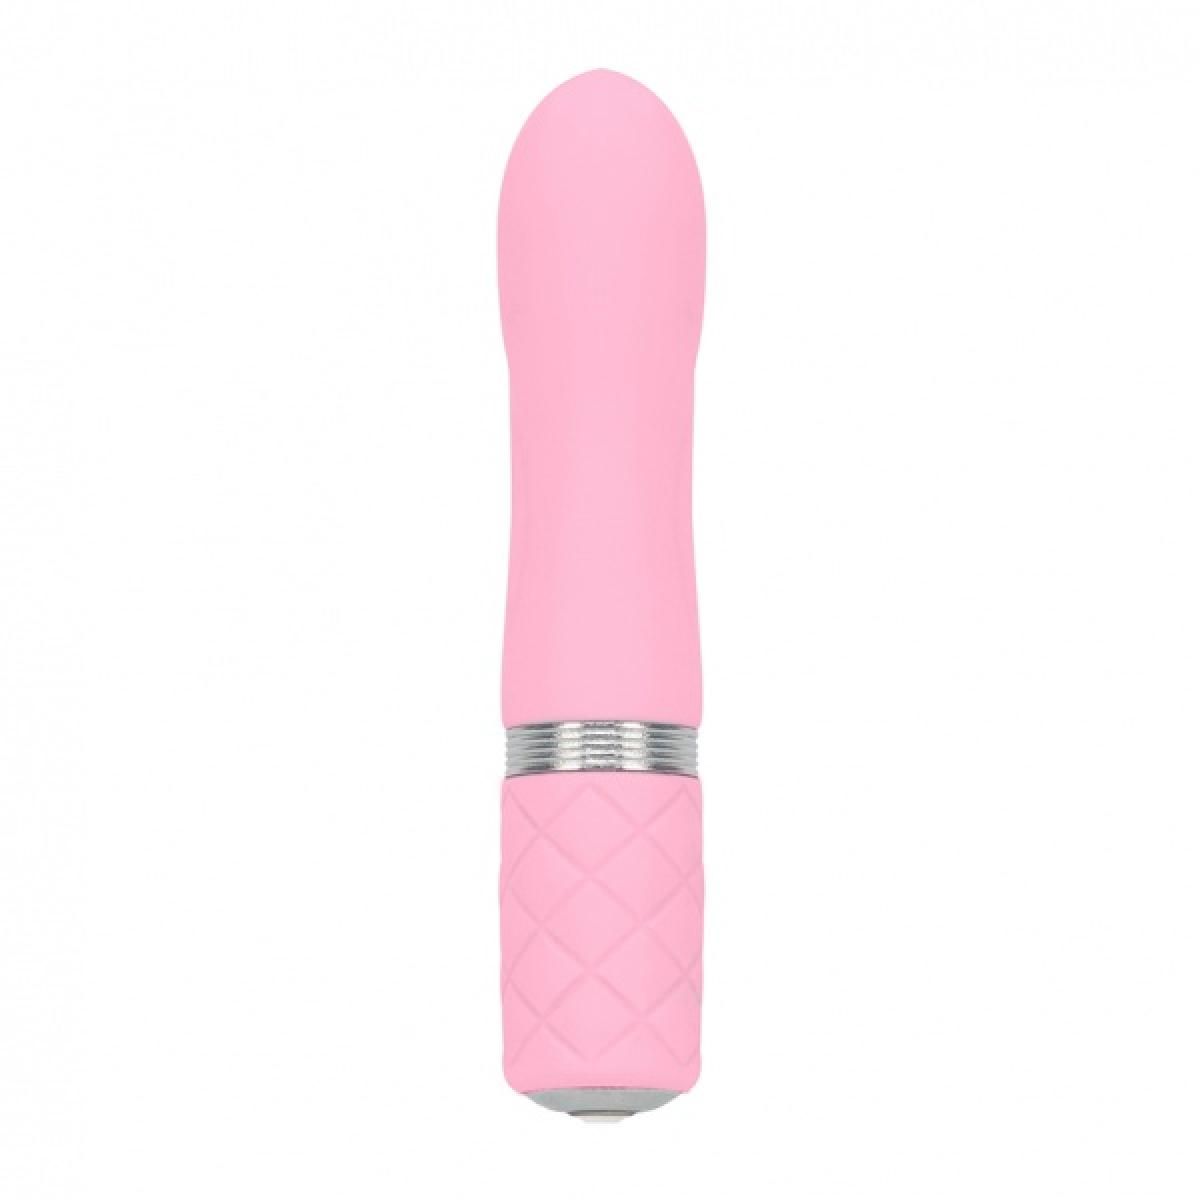 Pillow Talk Flirty Mini-Vibrator – Pink